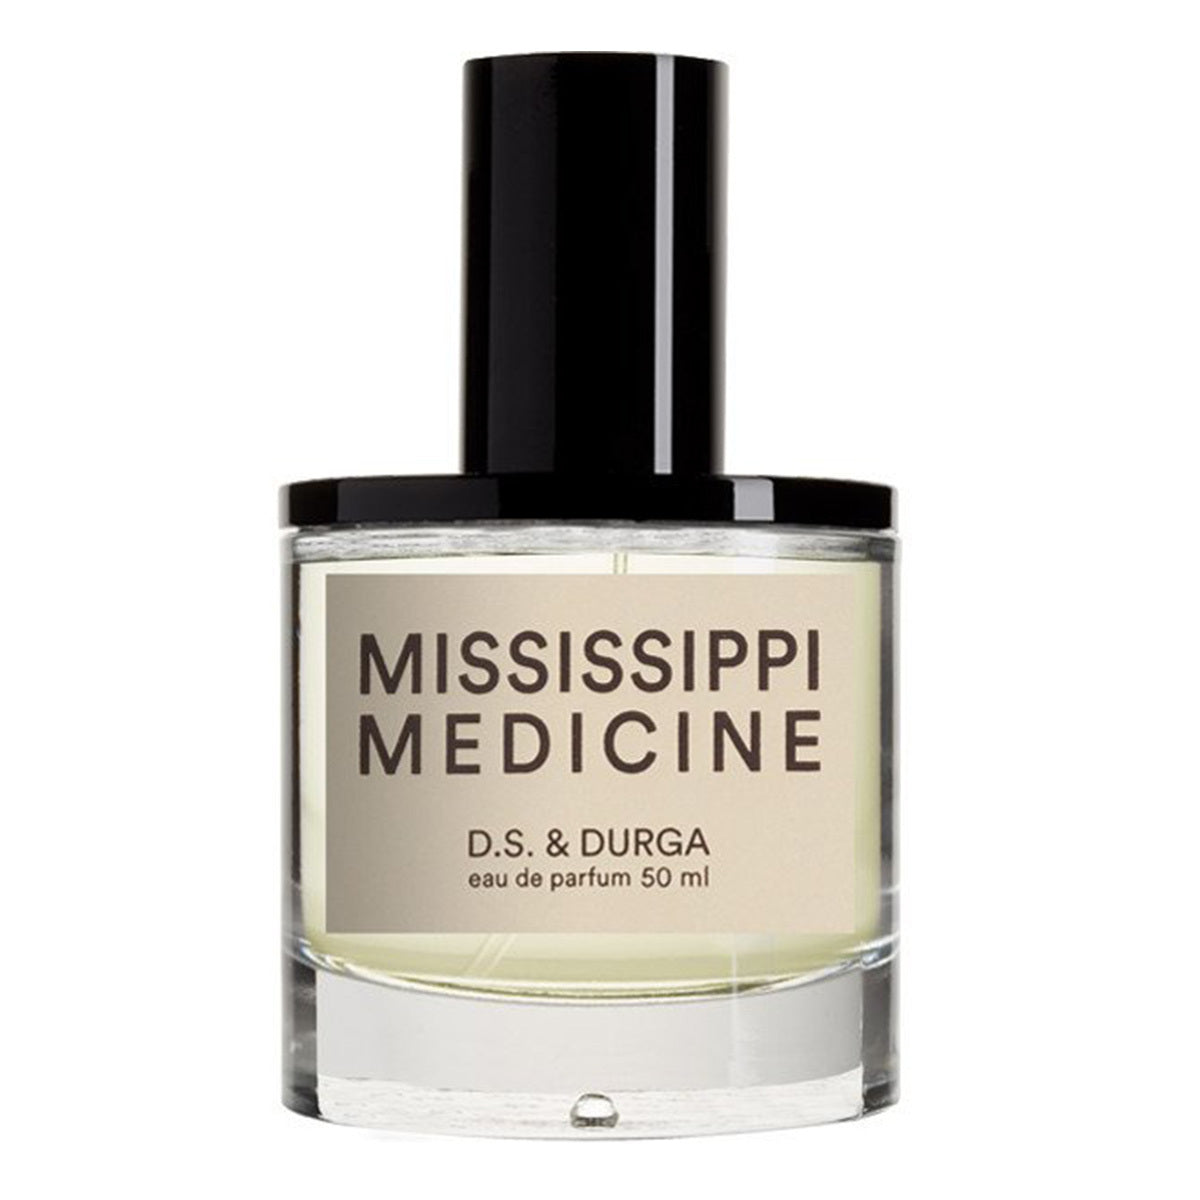 Primary image of Mississippi Medicine Eau de Parfum